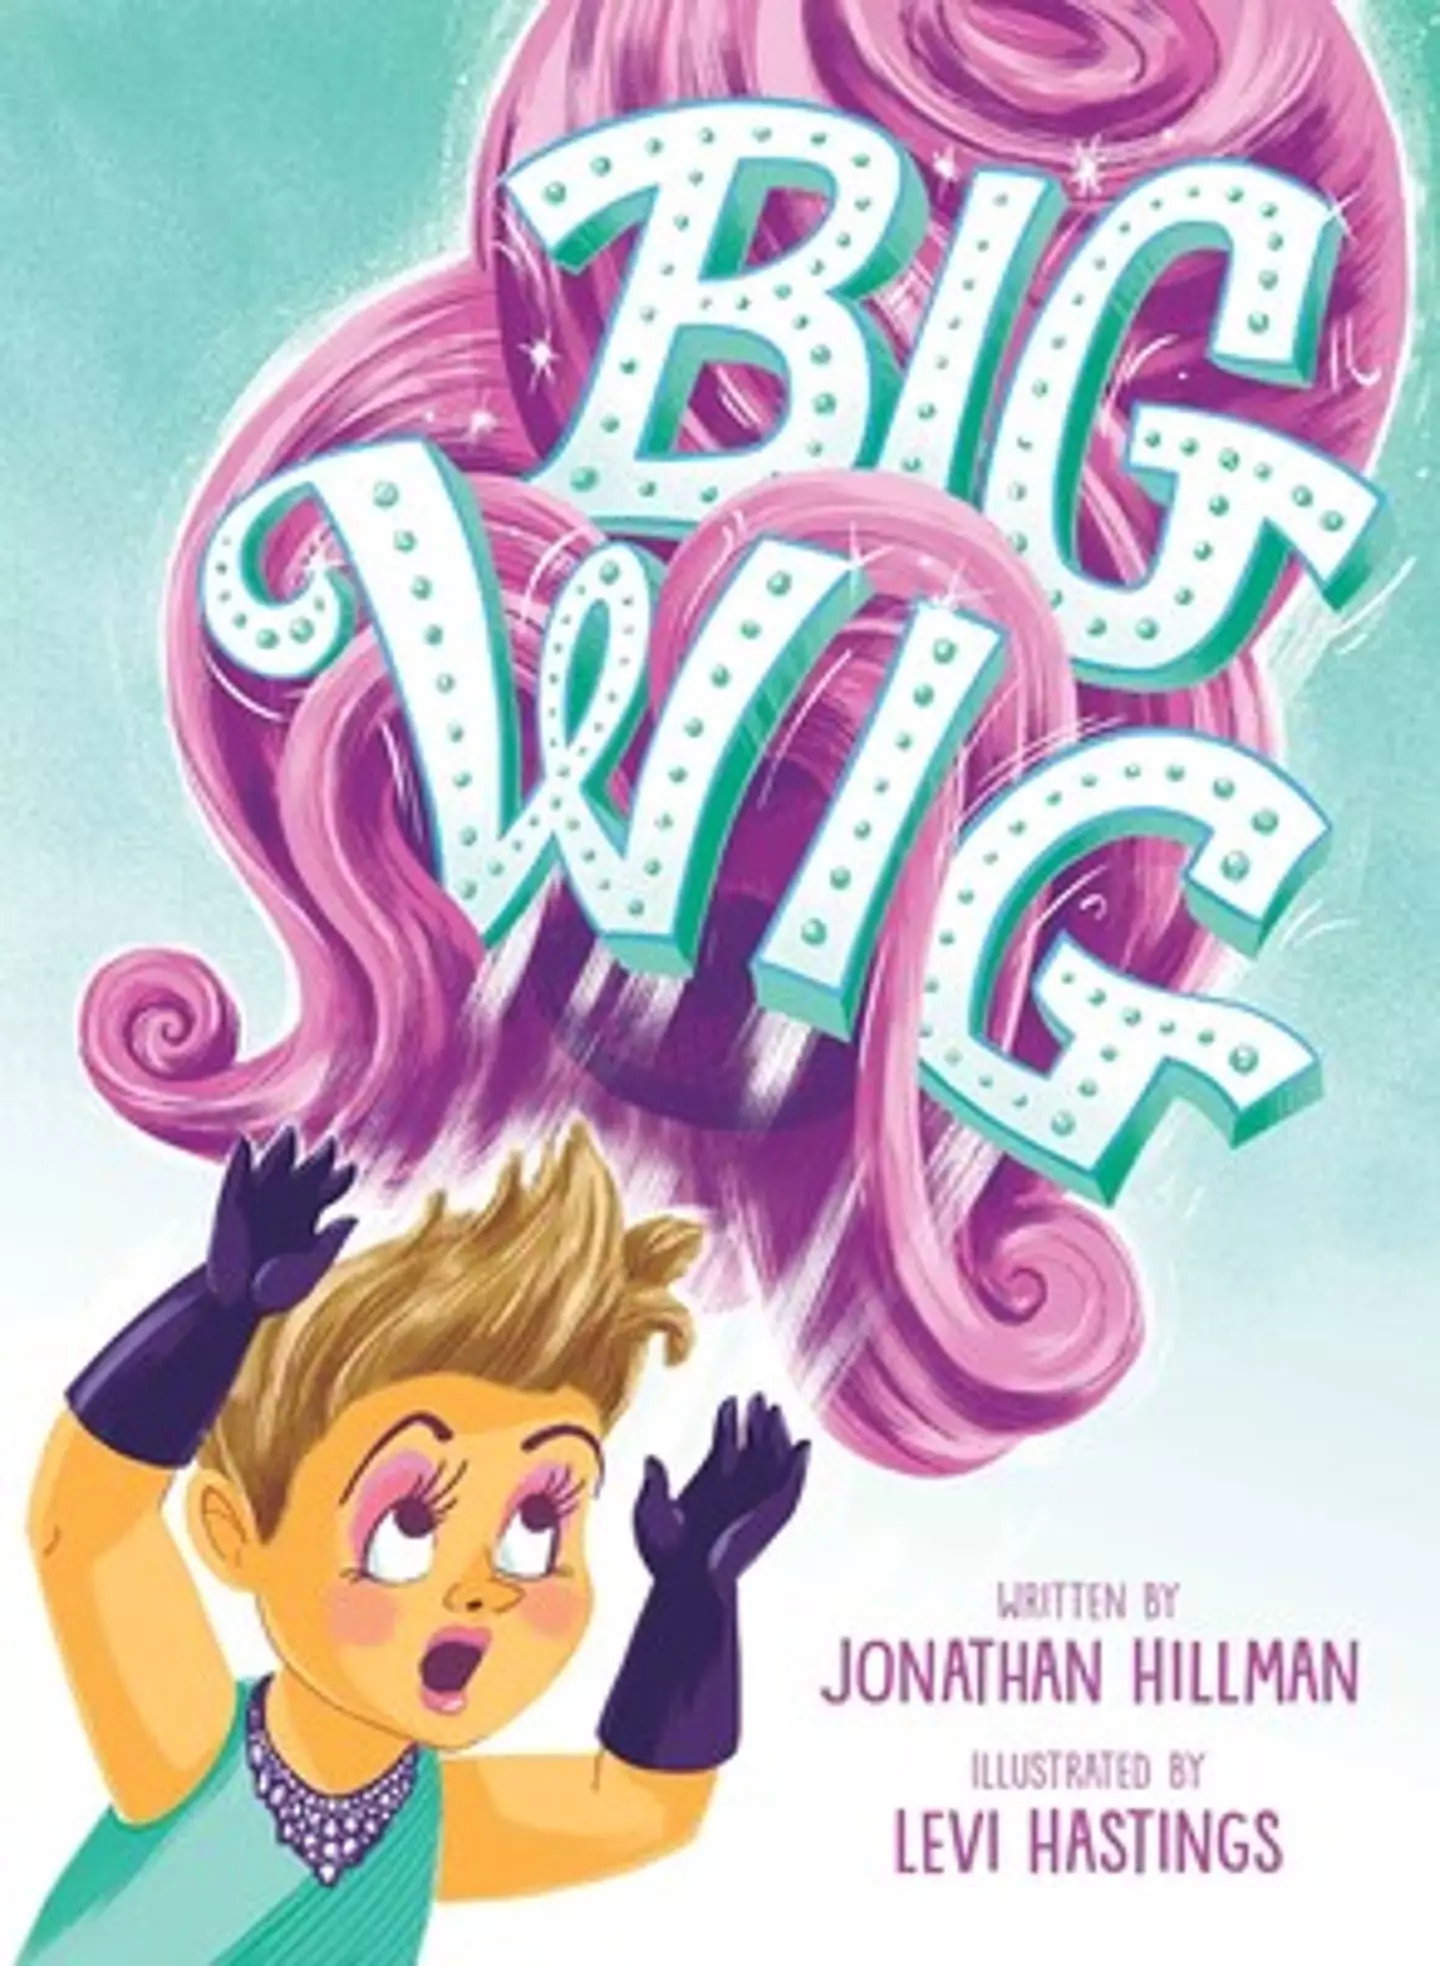 Big Wig by Jonathan Hillman.